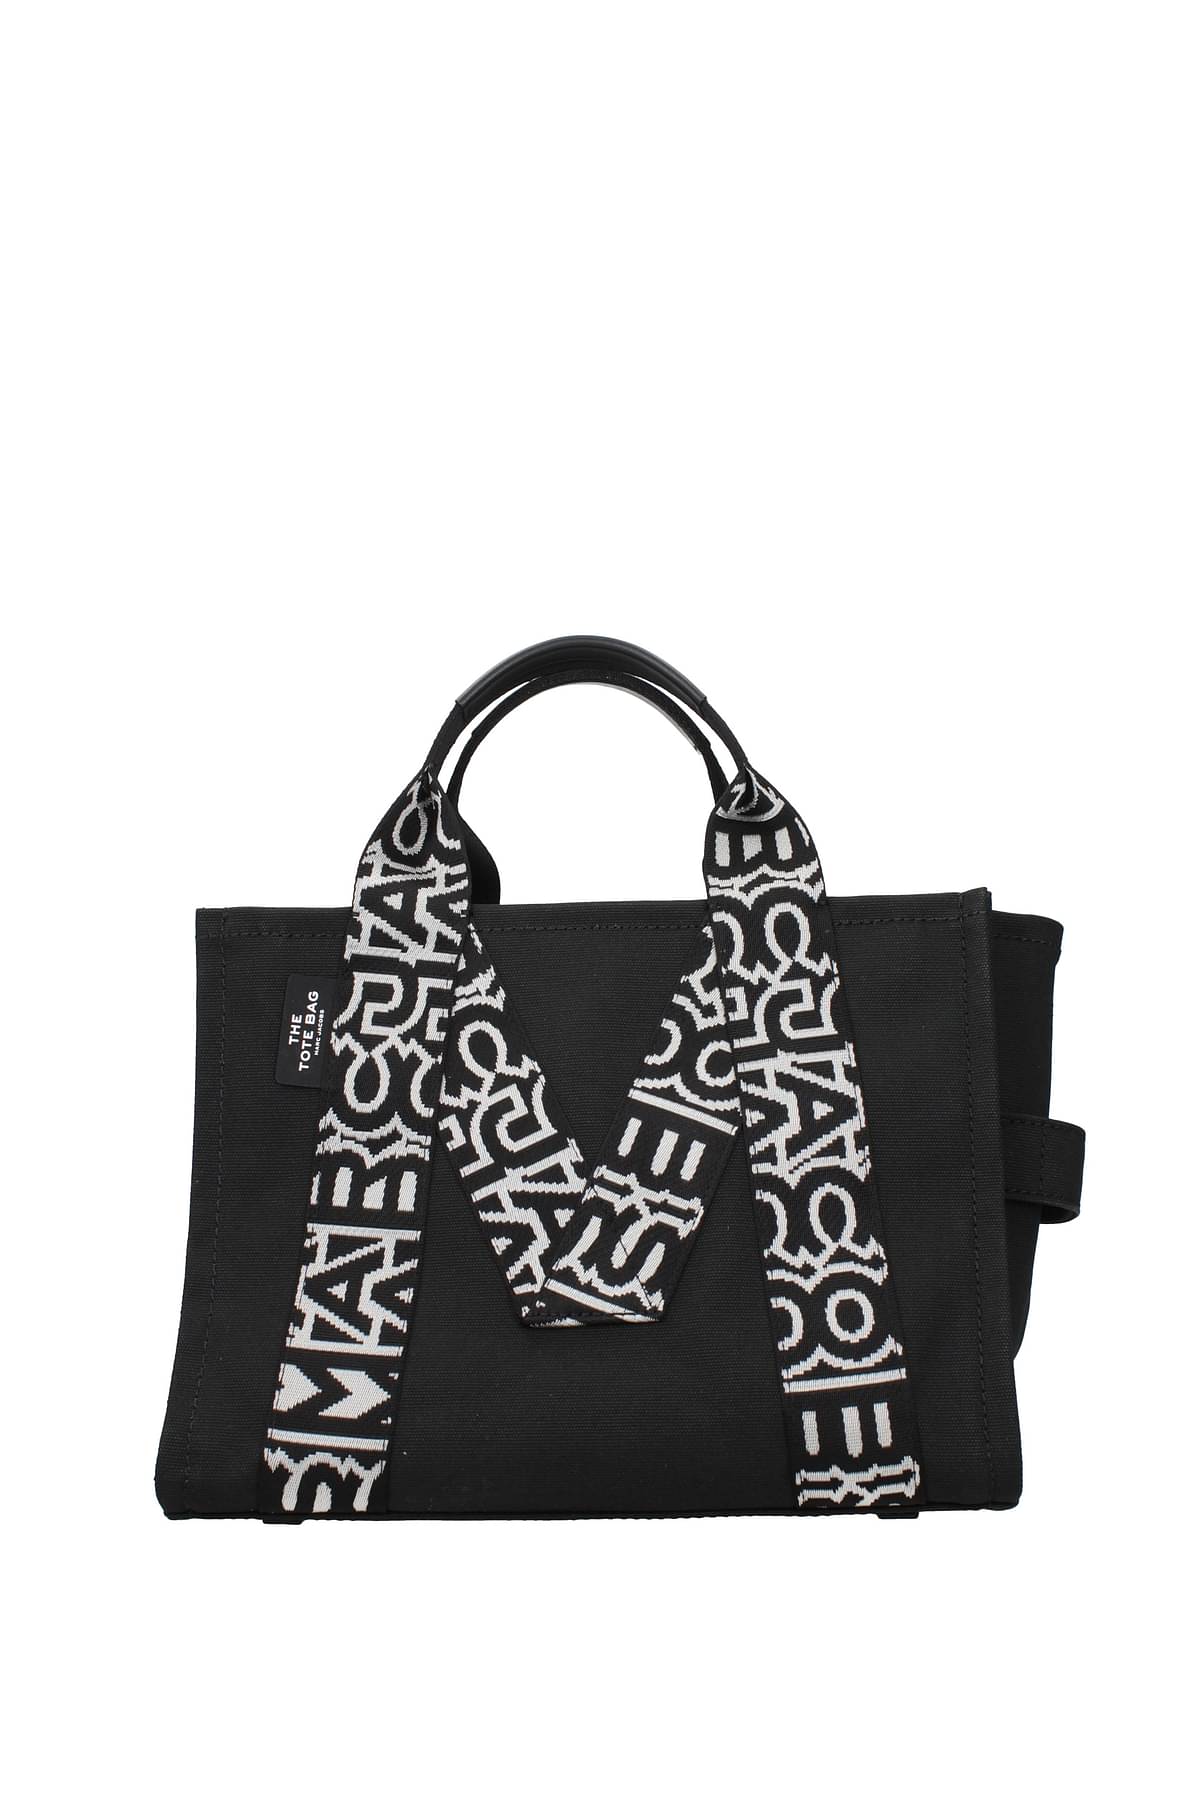 Marc Jacobs Black Medium 'The M Tote Bag' Tote